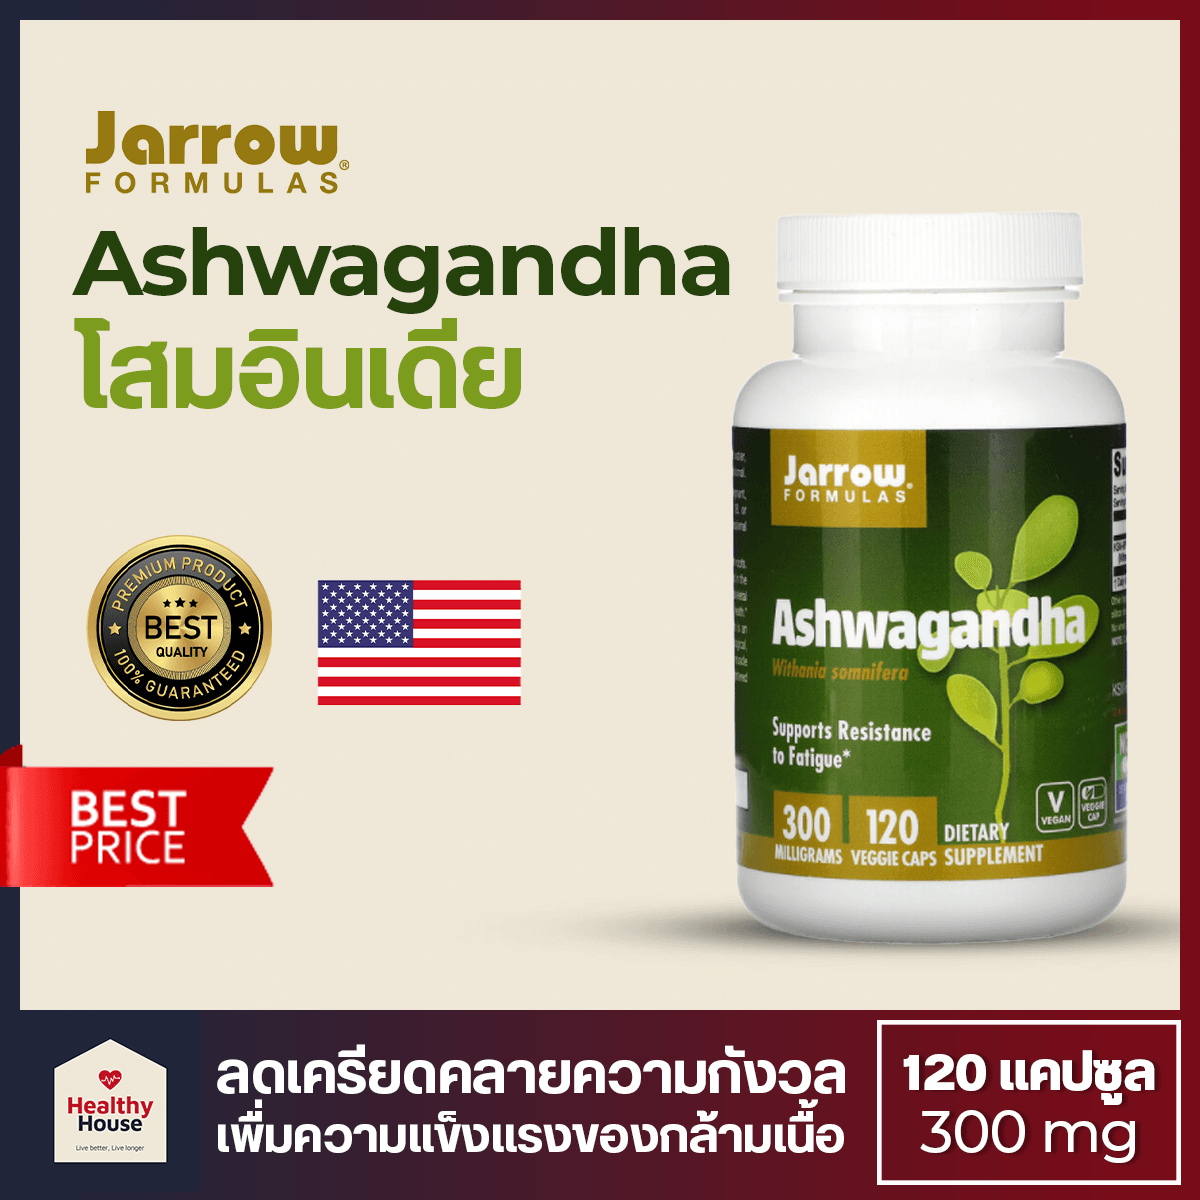 Ashwagandha โสมอินเดีย แอชวากันดา, Jarrow Formulas, 300 mg, 120 Veggie Caps, (120 แคปซูล)